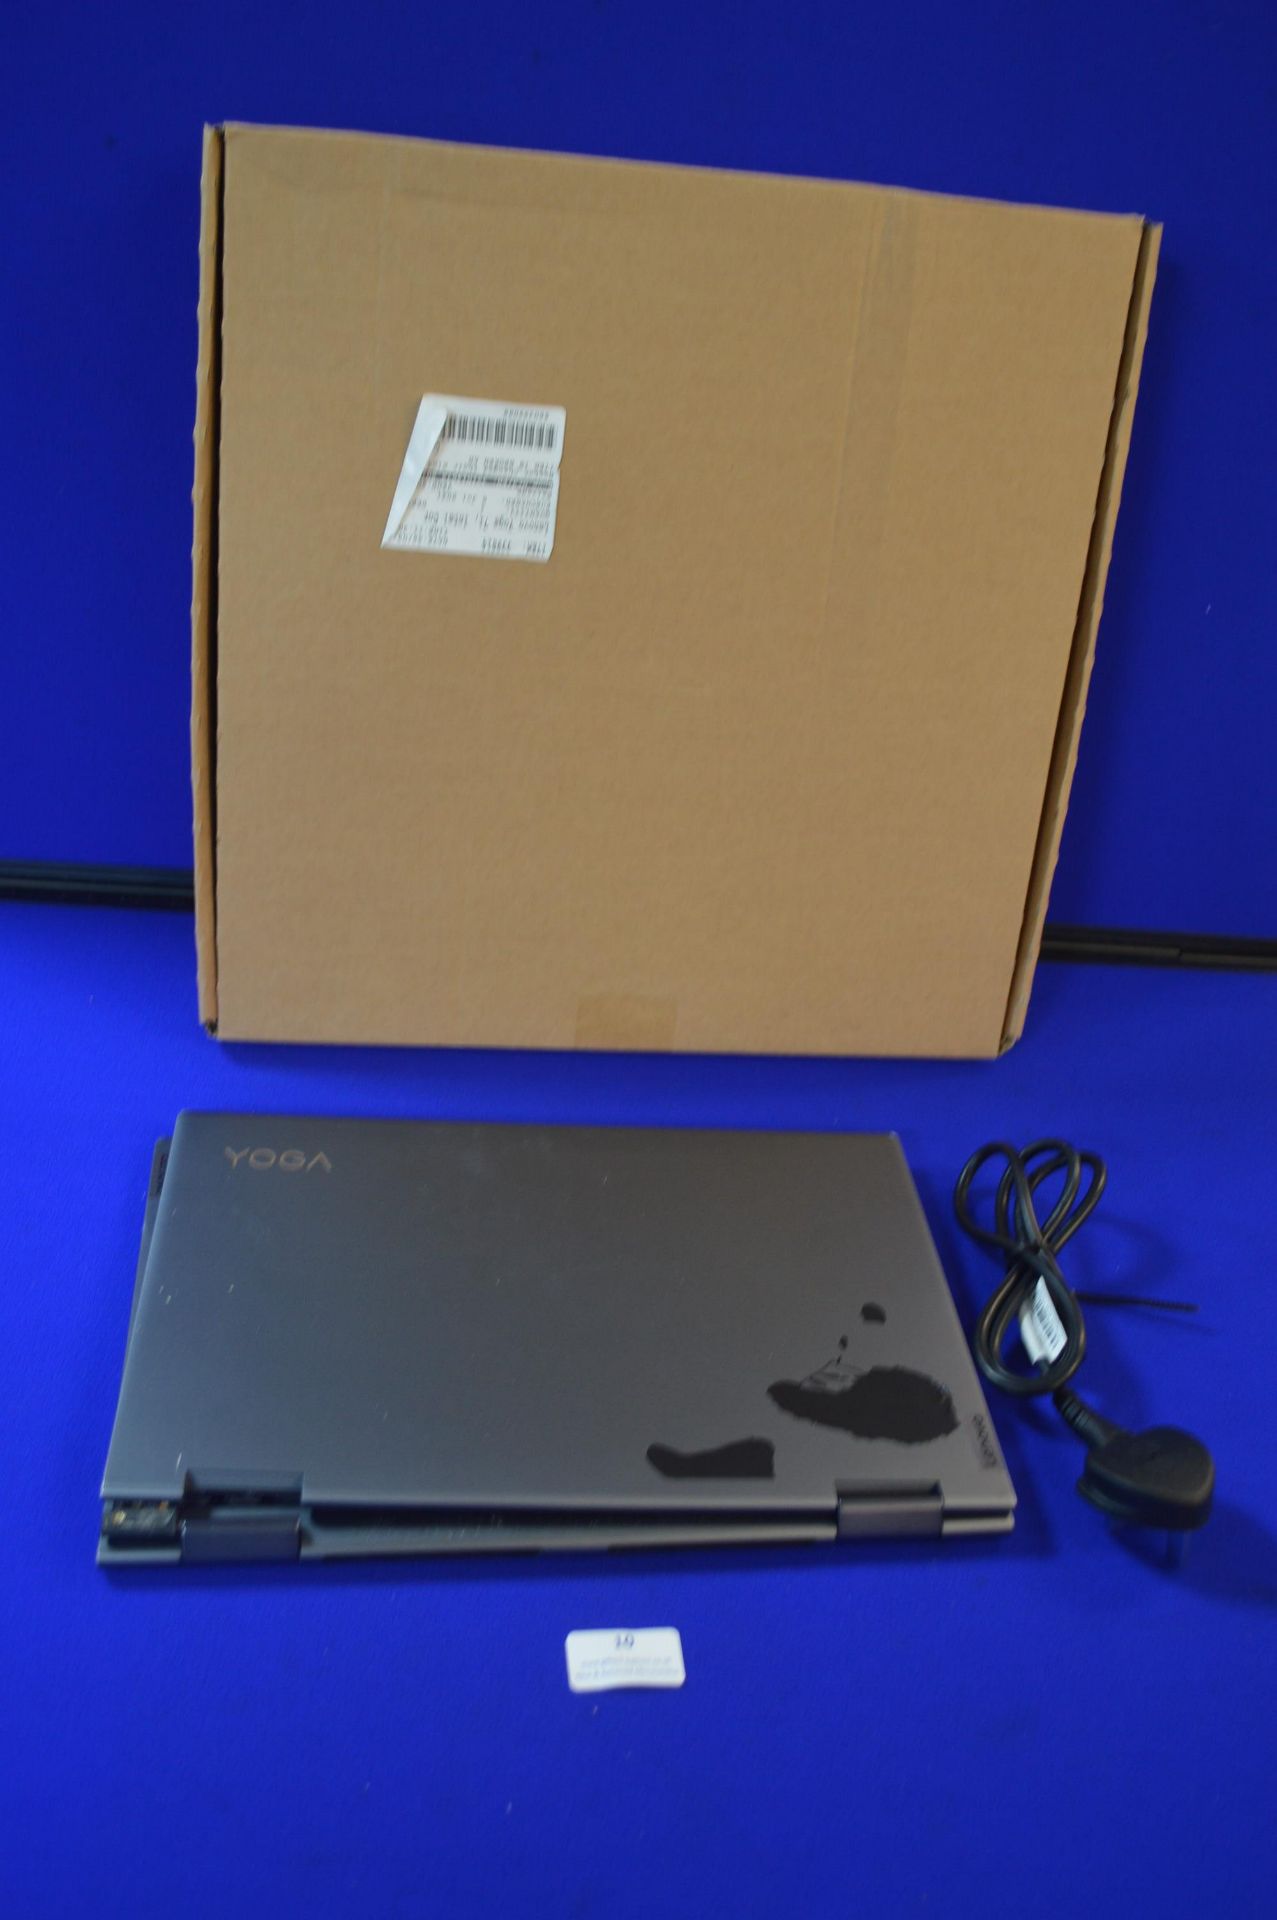 *Lenovo Yoga Notebook Computer with Intel Evo i7 P